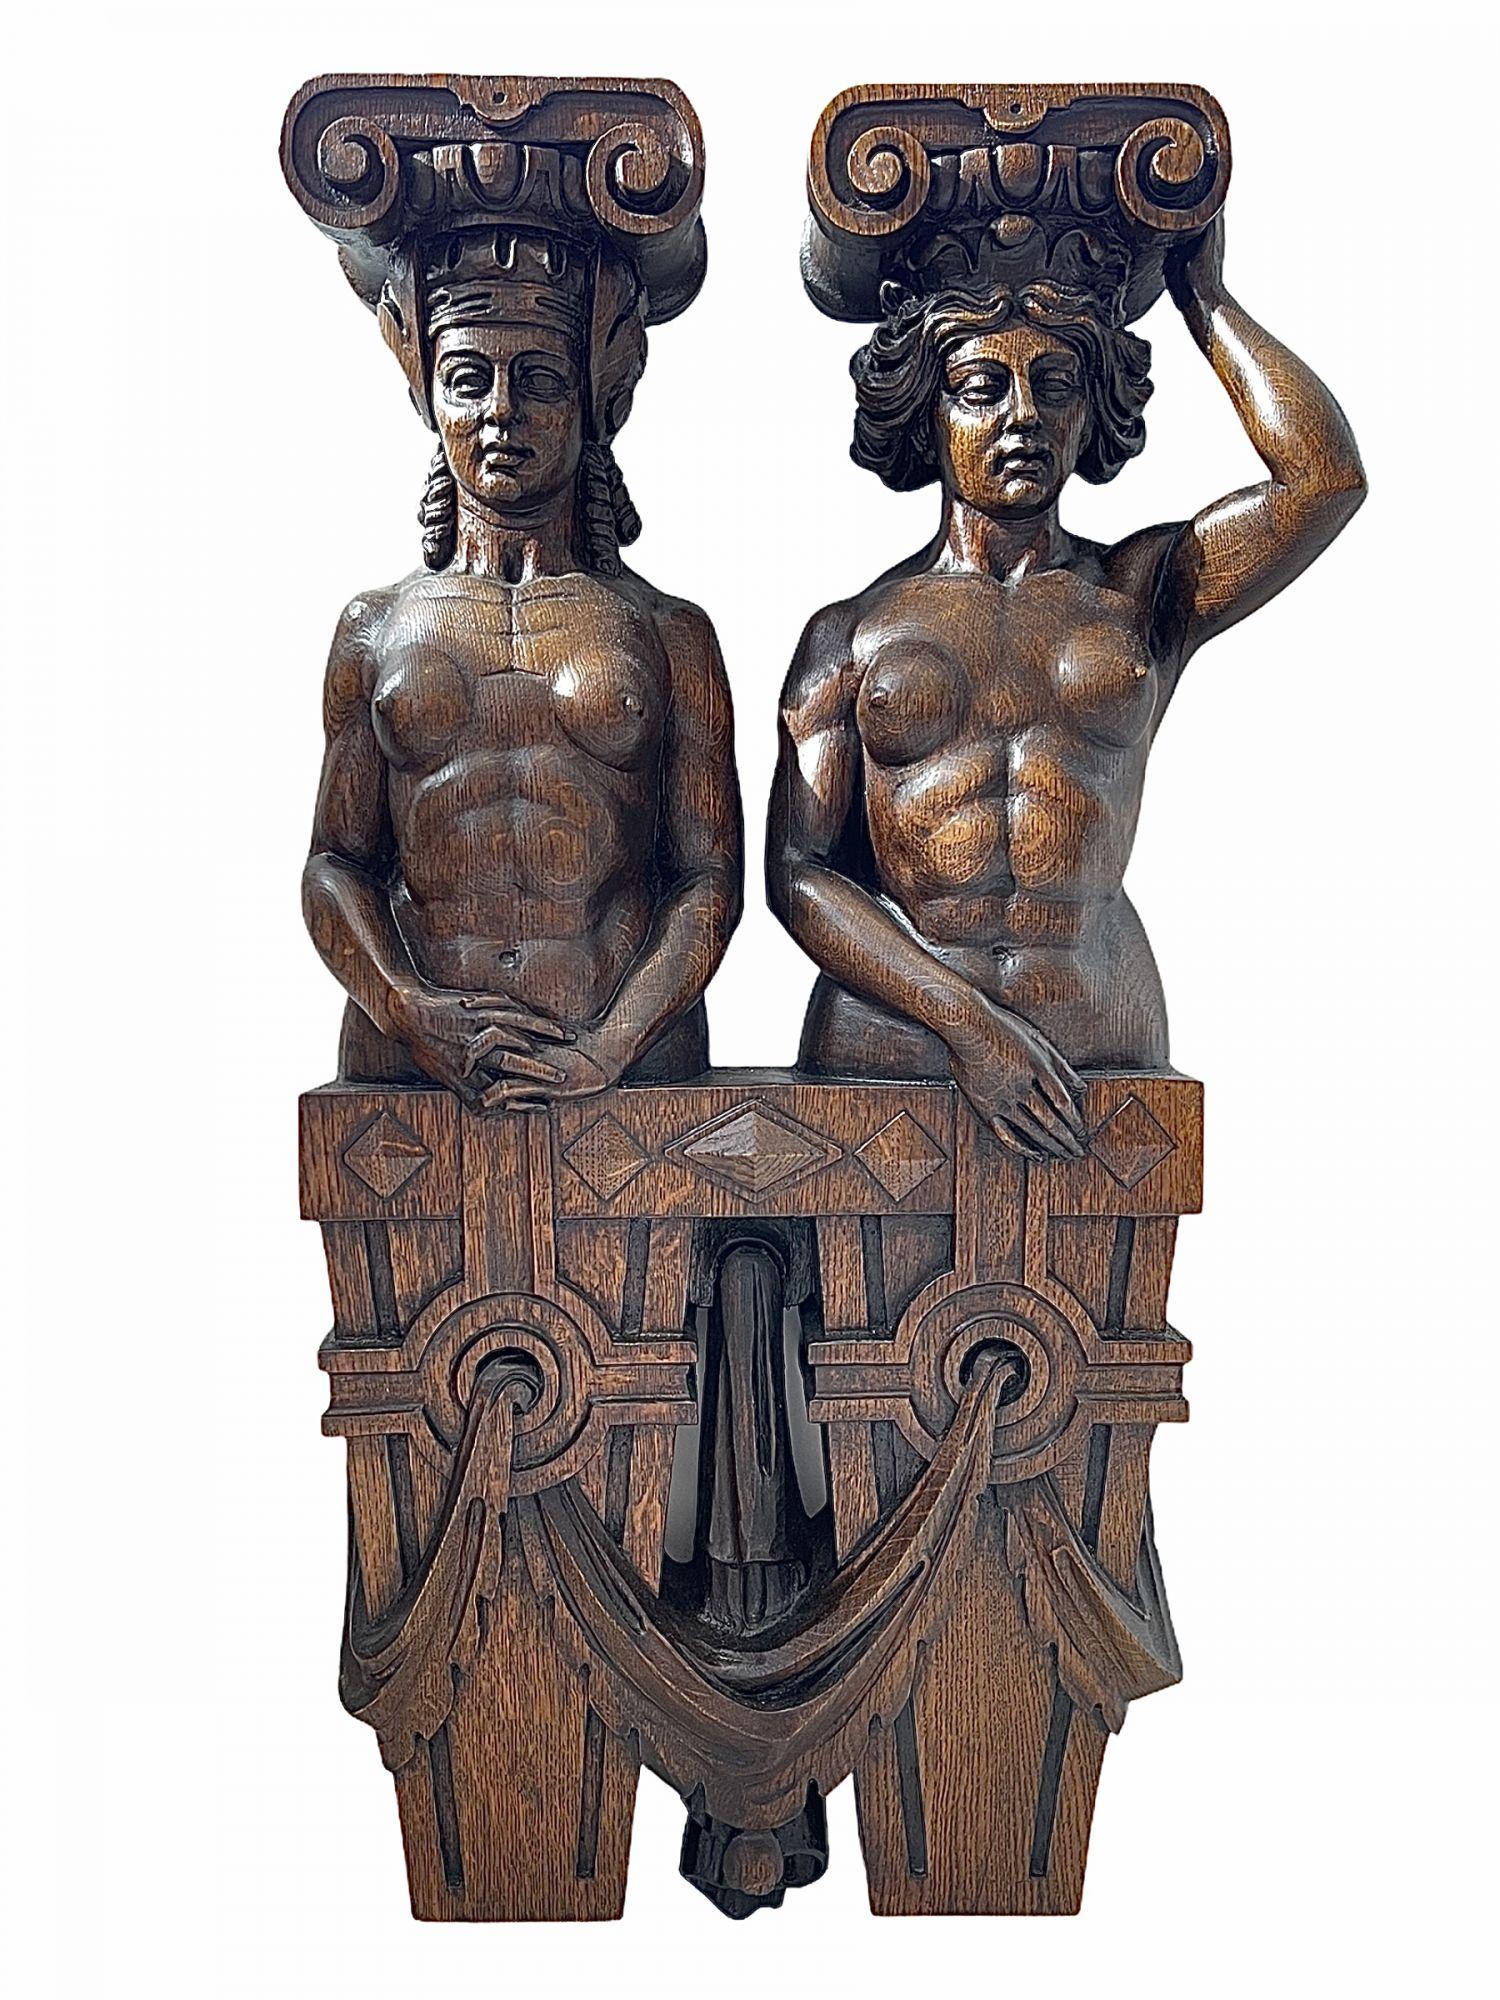 Romantic Early 19th Century Pair of German Oak Caryatidal Figures Depicting Historicism For Sale